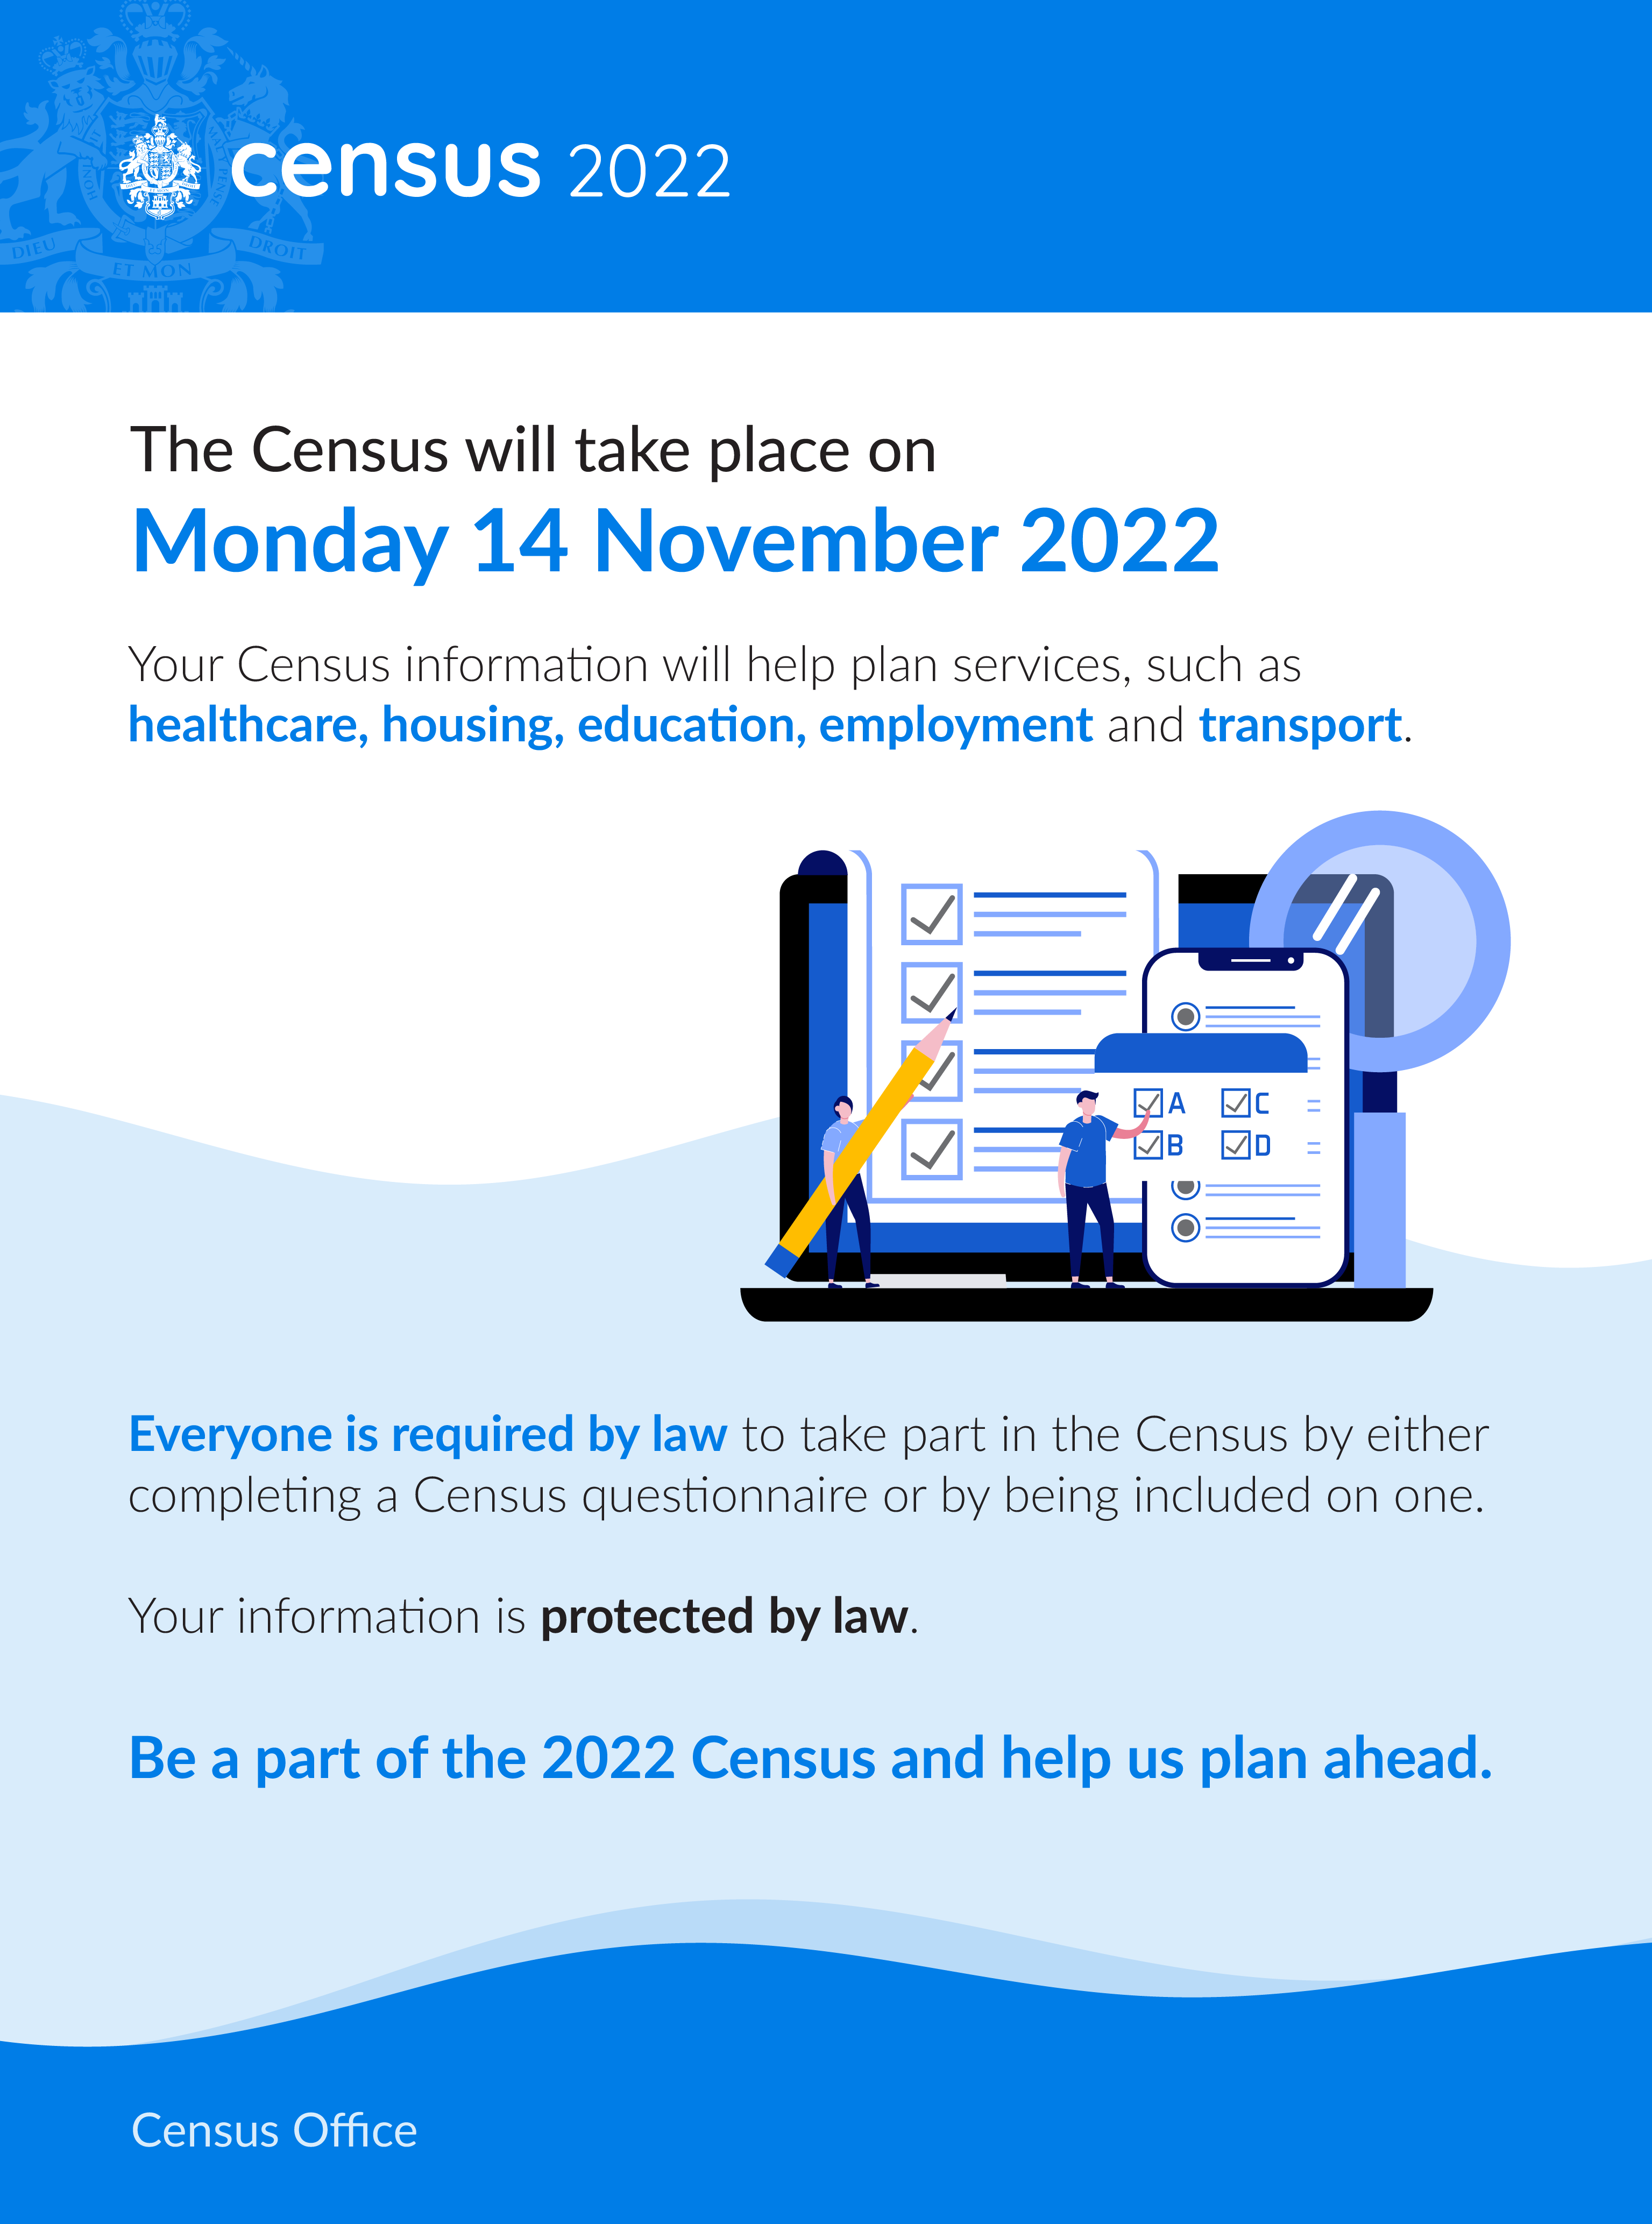 Census Advert Image